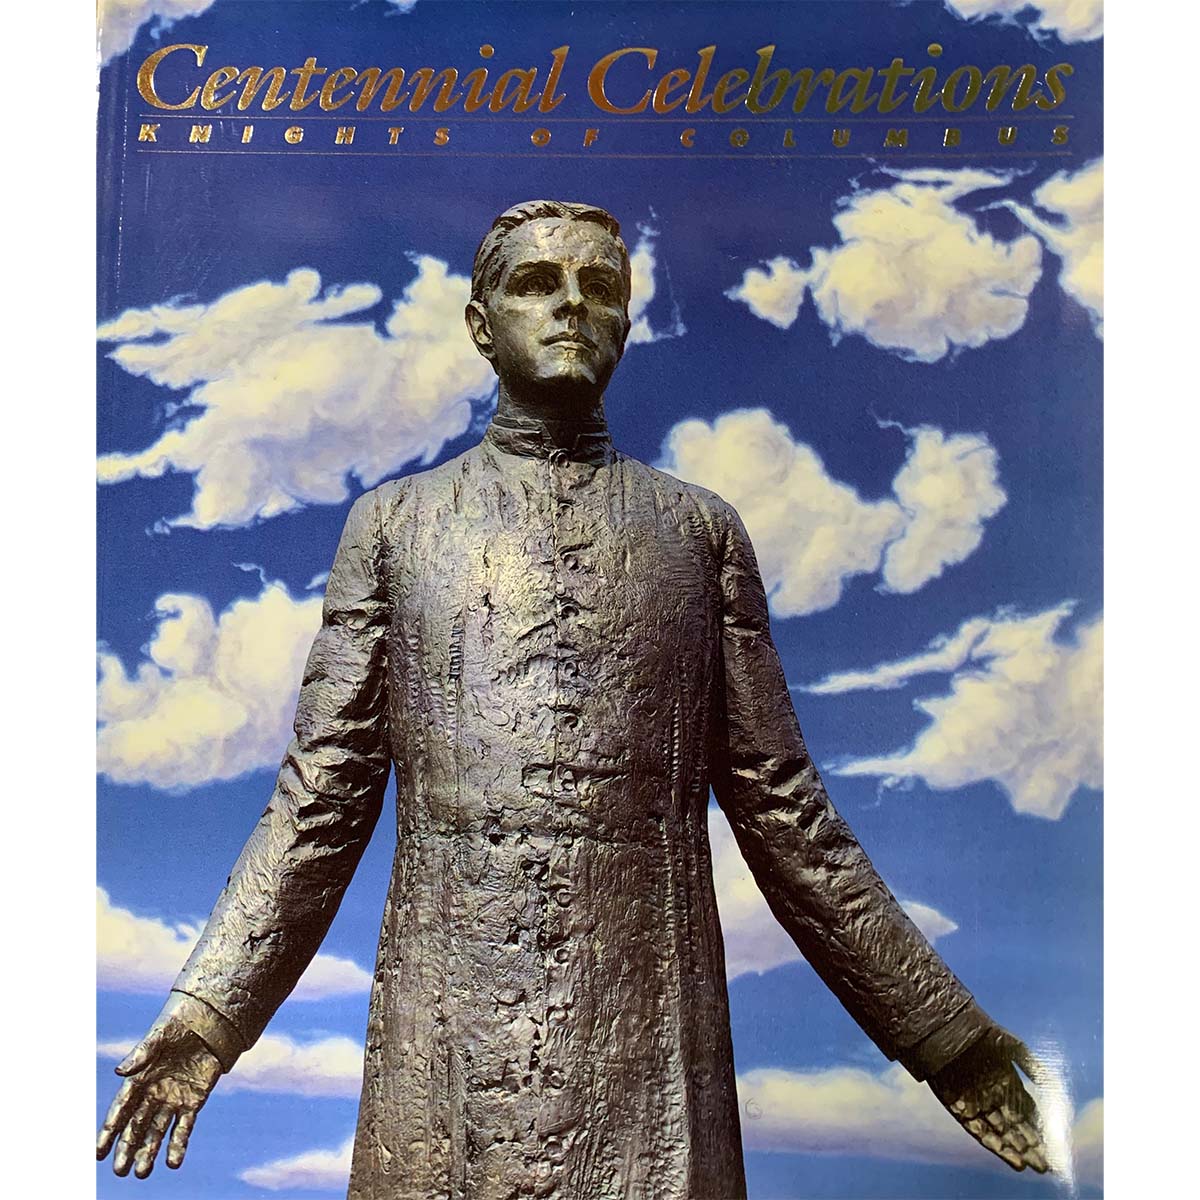 Centennial Celebration - Volume C